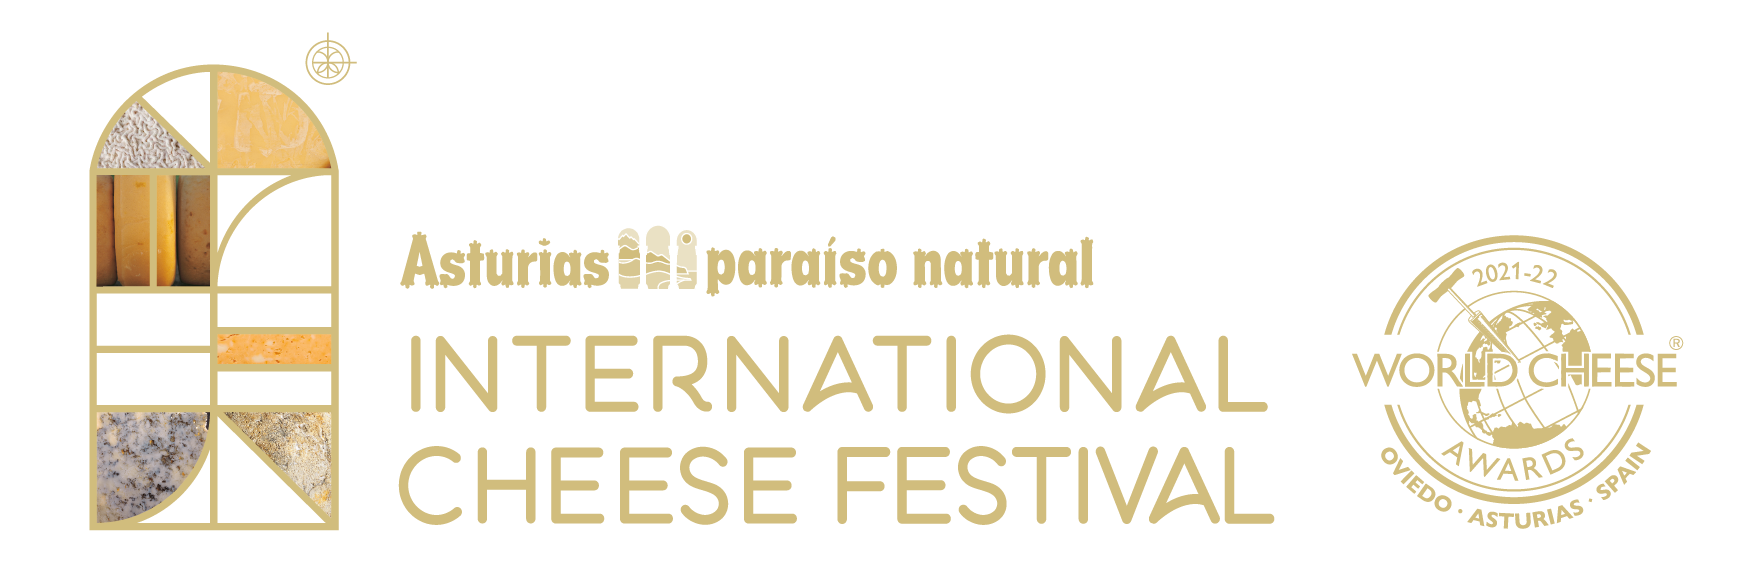 Internationa Cheese Festival Asturias